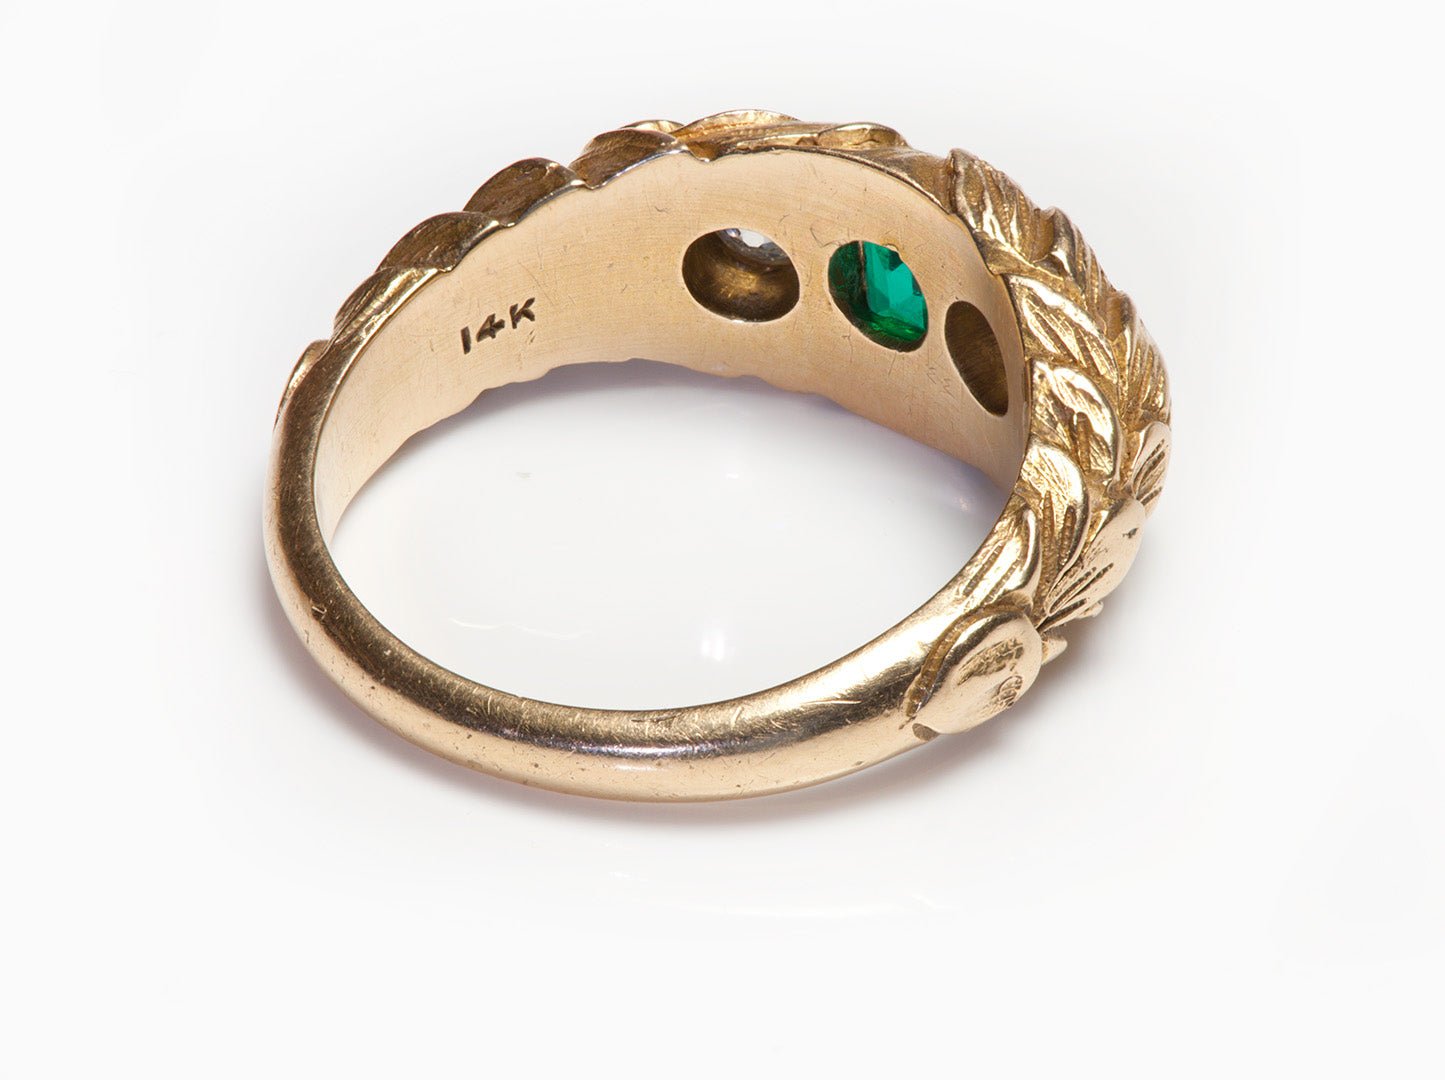 Antique Craved Gold Diamond Emerald Men's Ring